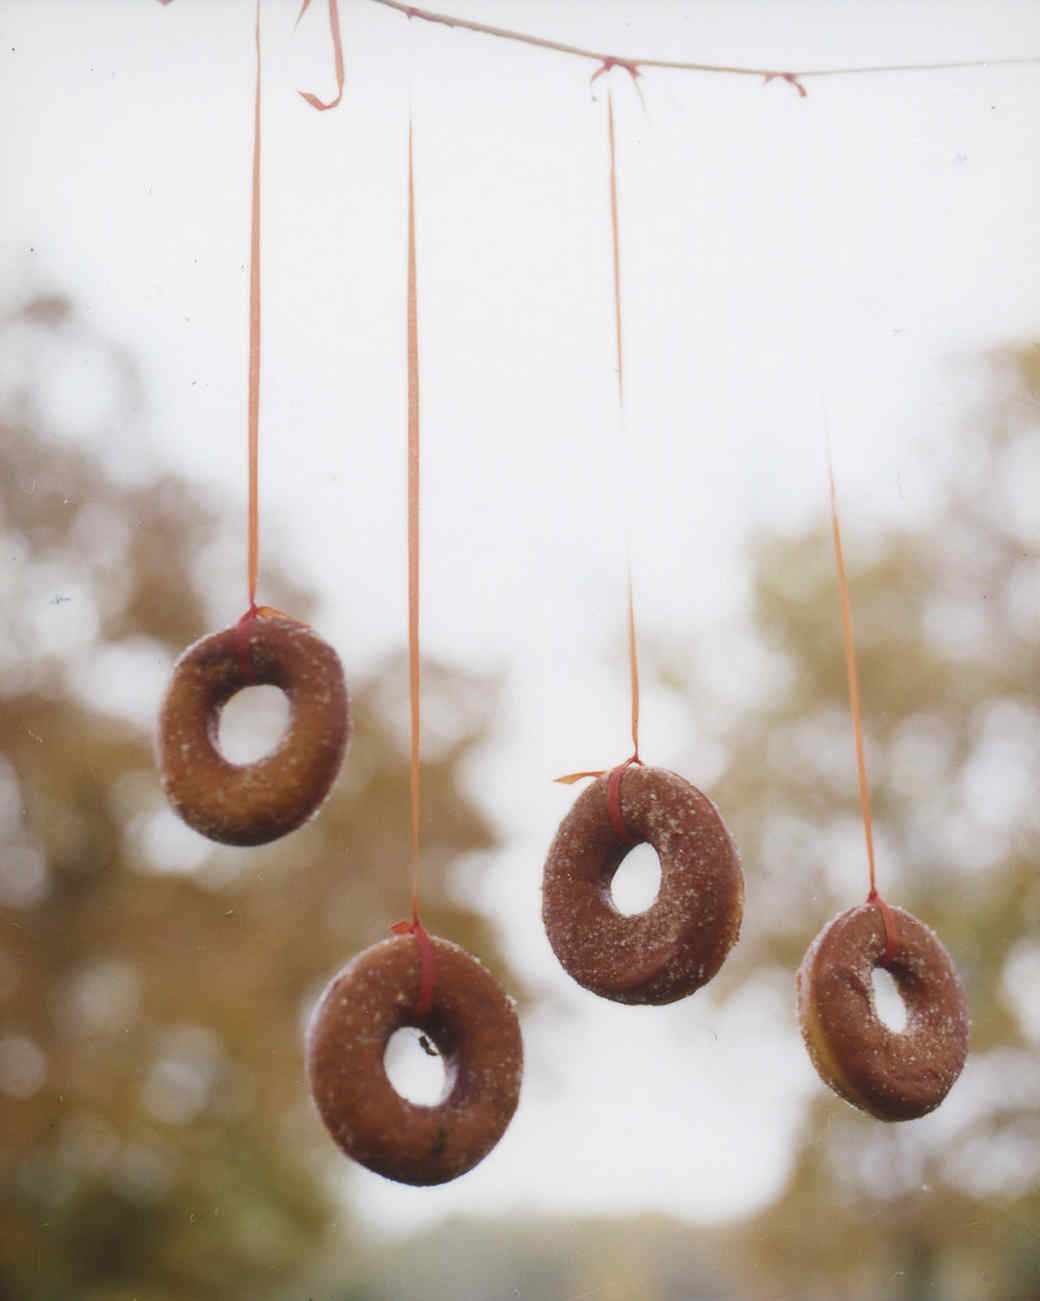 raised doughnuts